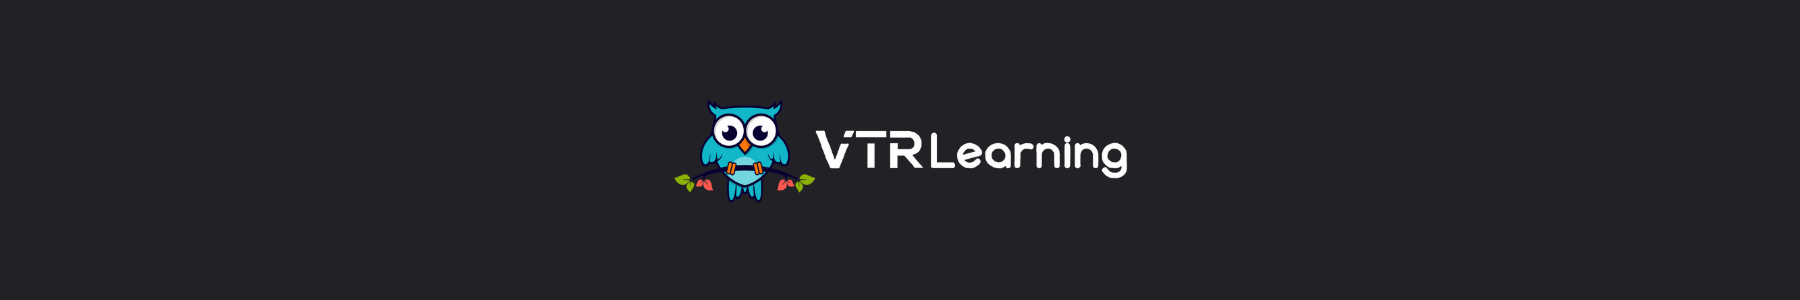 VTR Learning Landing Page Header-1